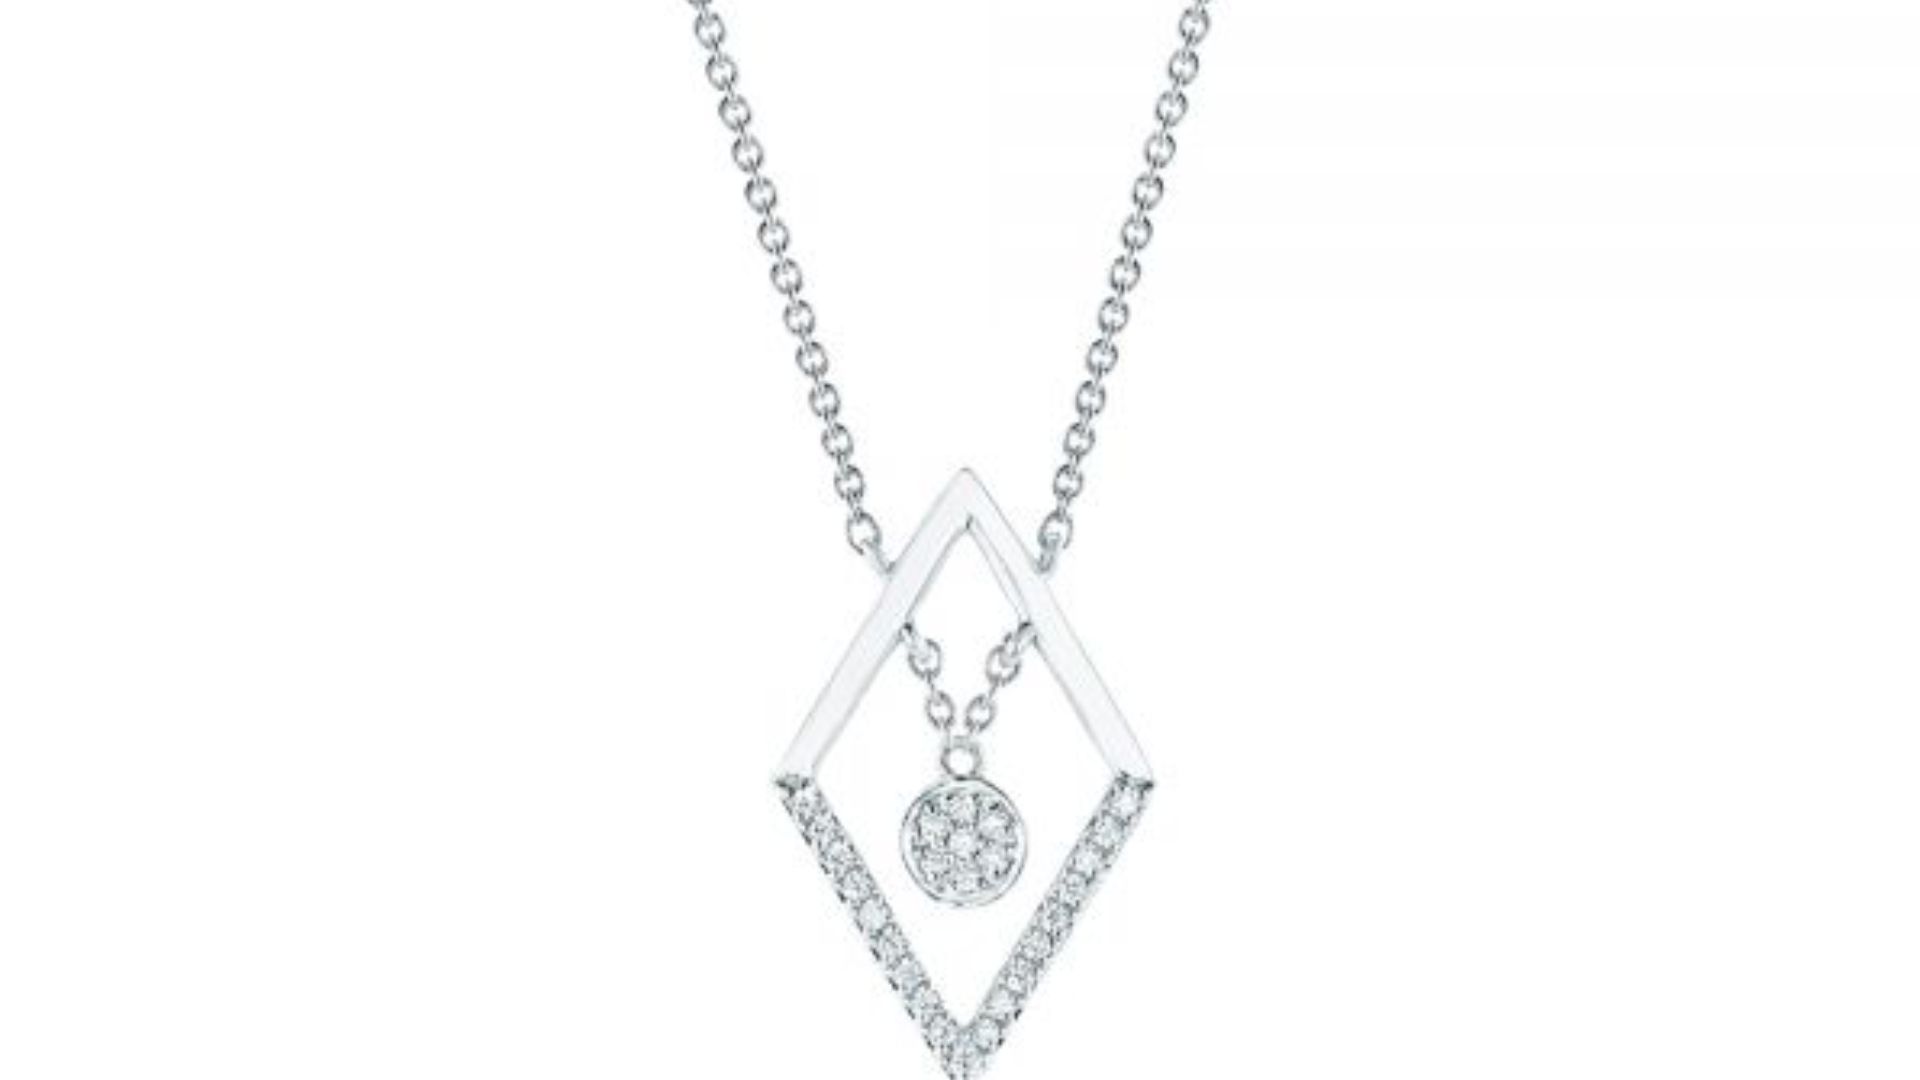 Best Platinum Jewelry With Geometric Shapes